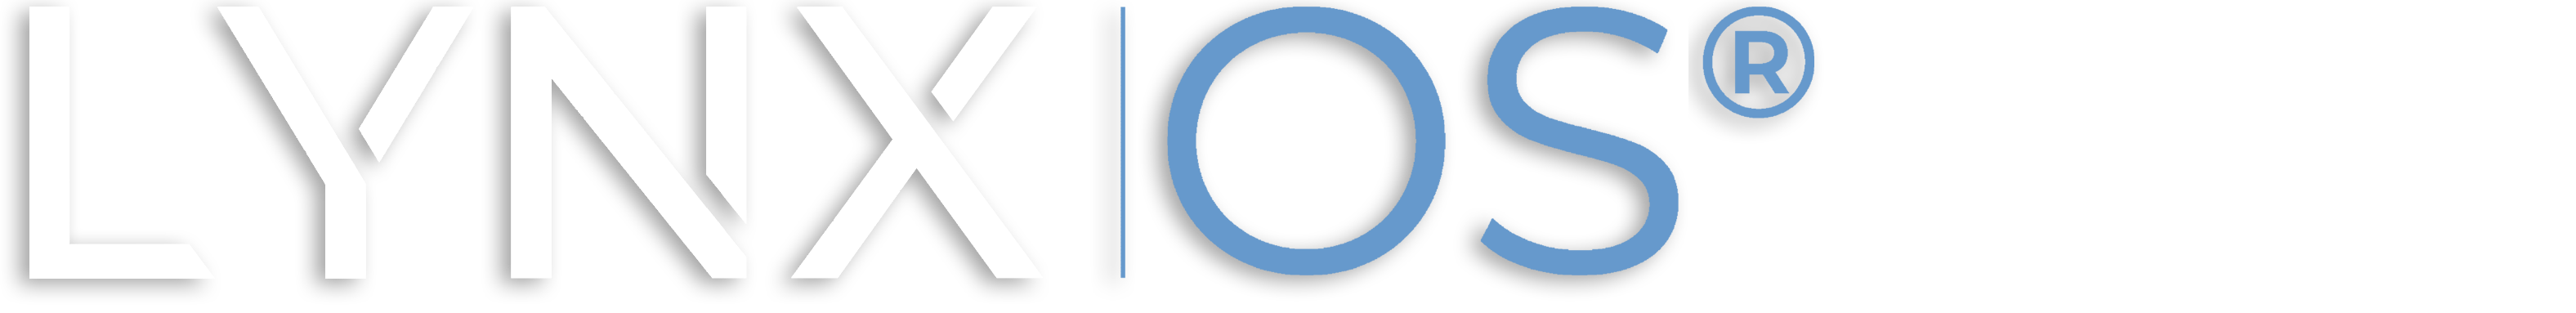 LynxOS® Logo white blue drop shadow